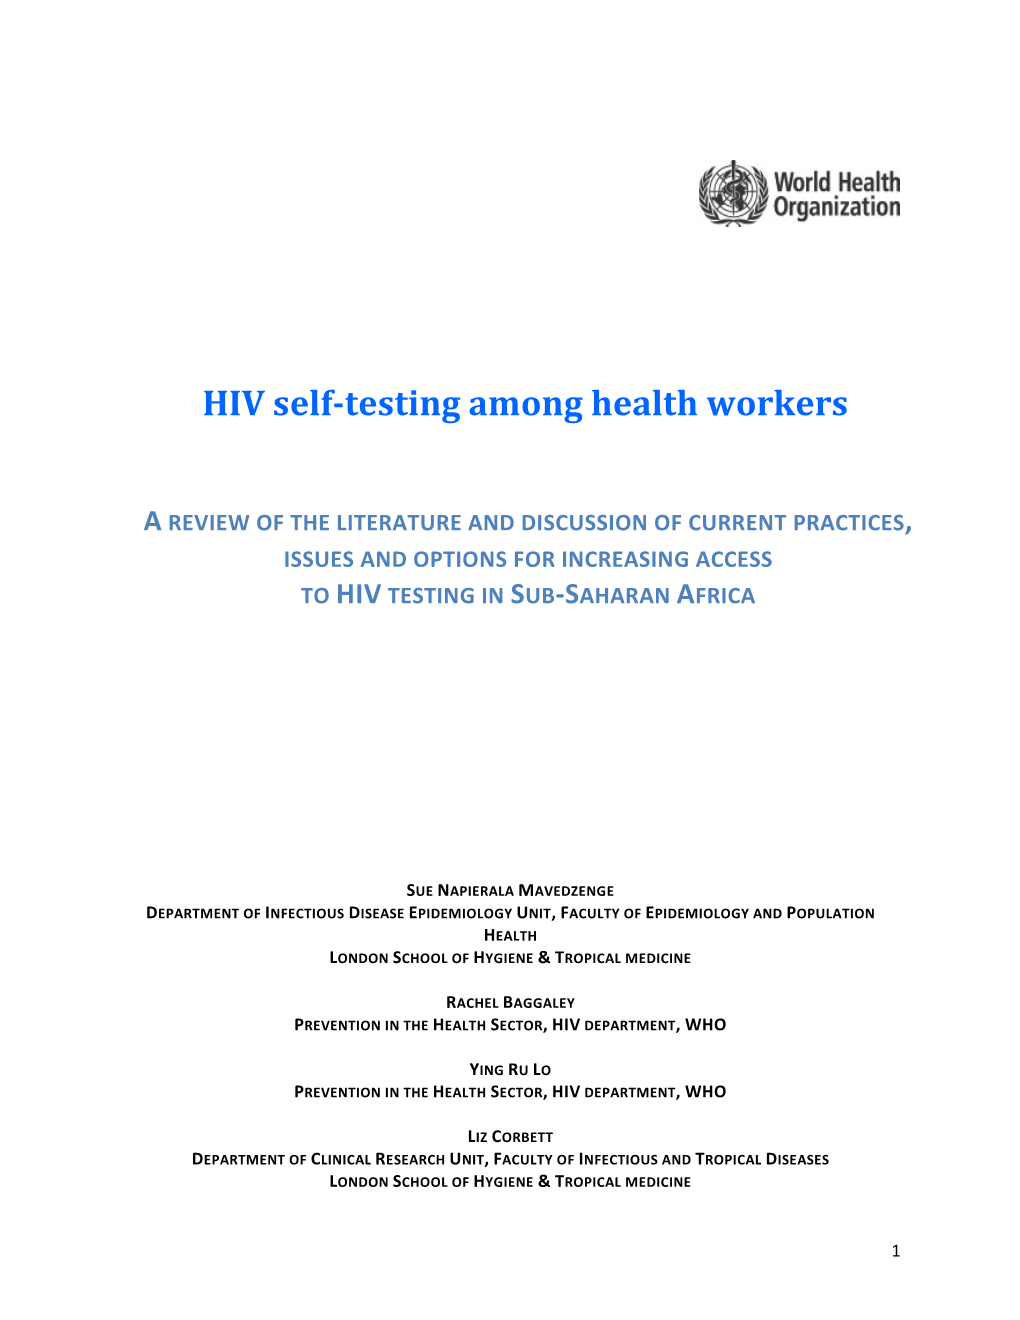 HIV Self-Testing Among Health Workers